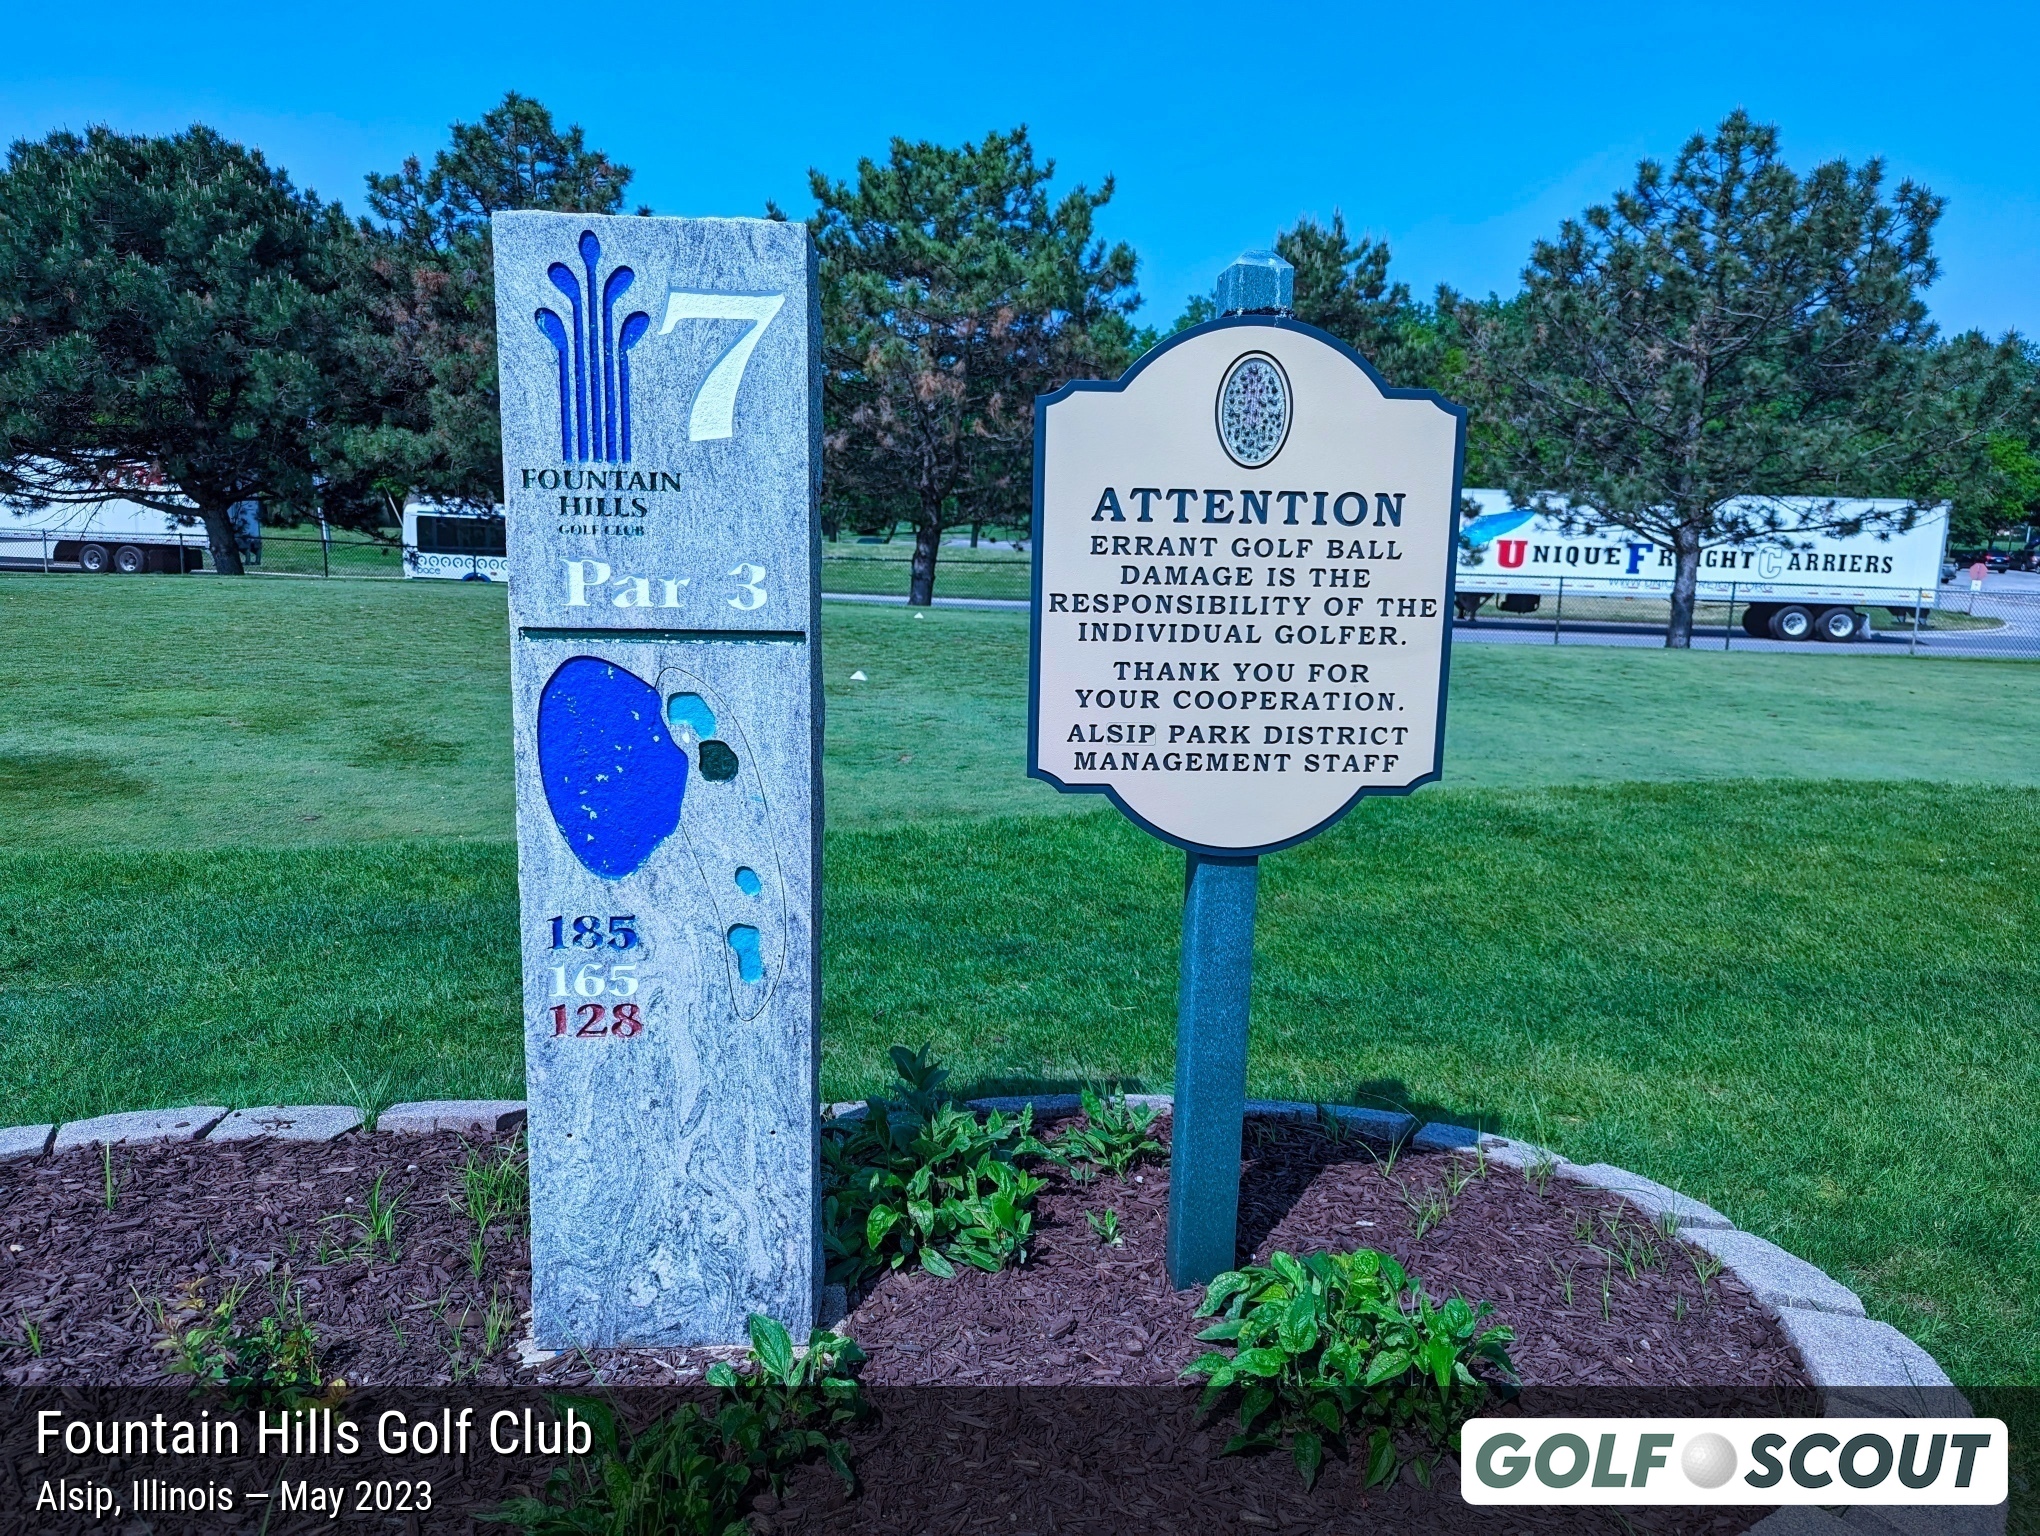 Miscellaneous photo of Fountain Hills Golf Club in Alsip, Illinois. 